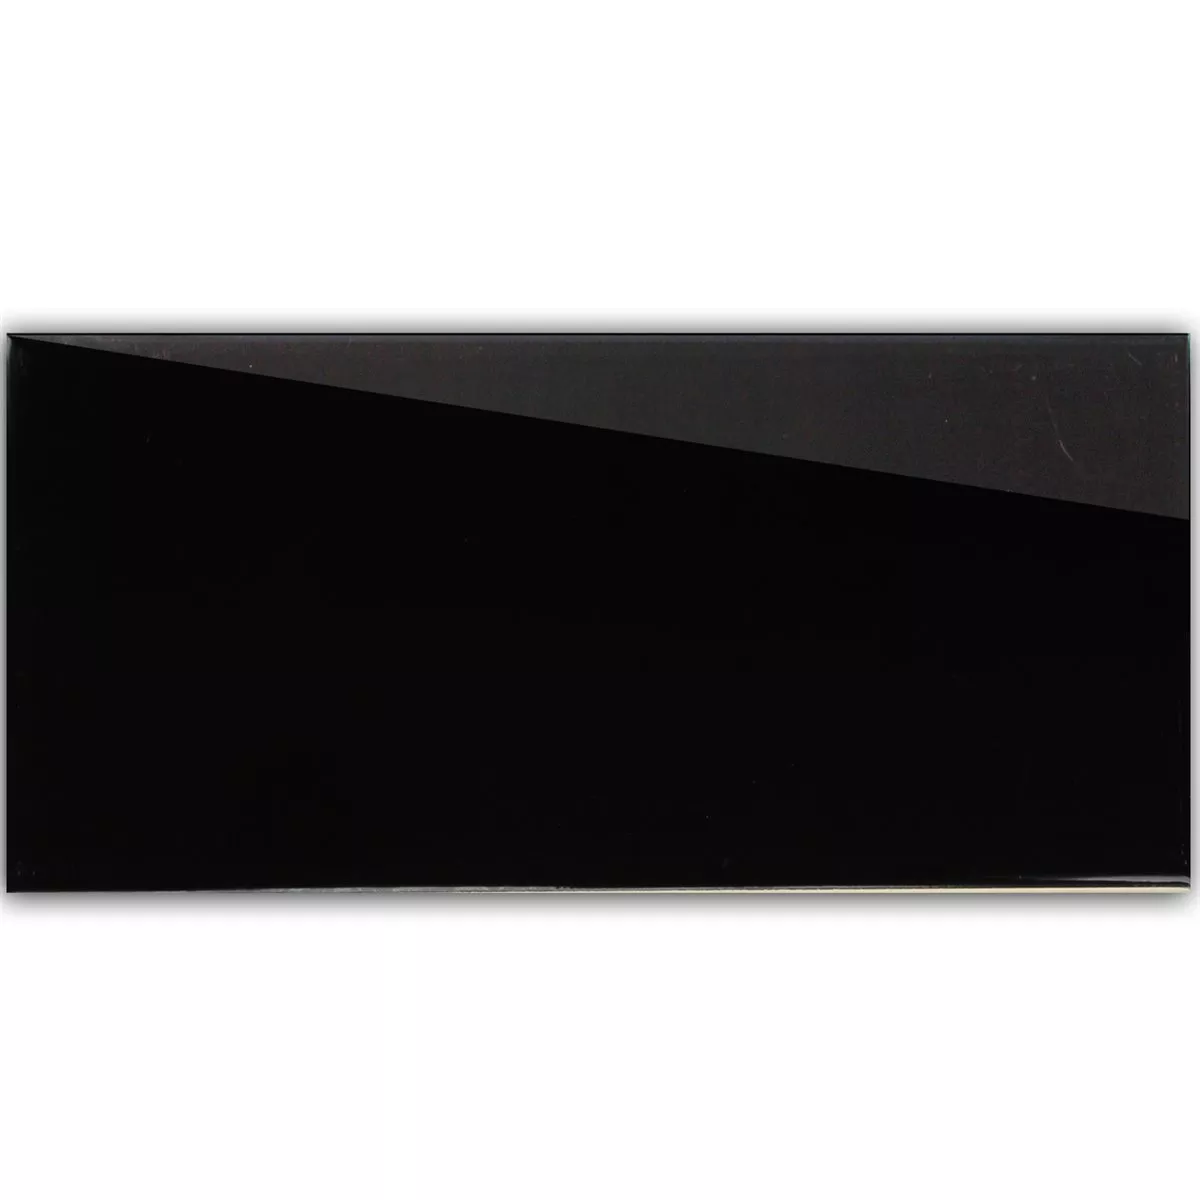 Sample Metro Wall Tiles Black Glossy 10x30cm